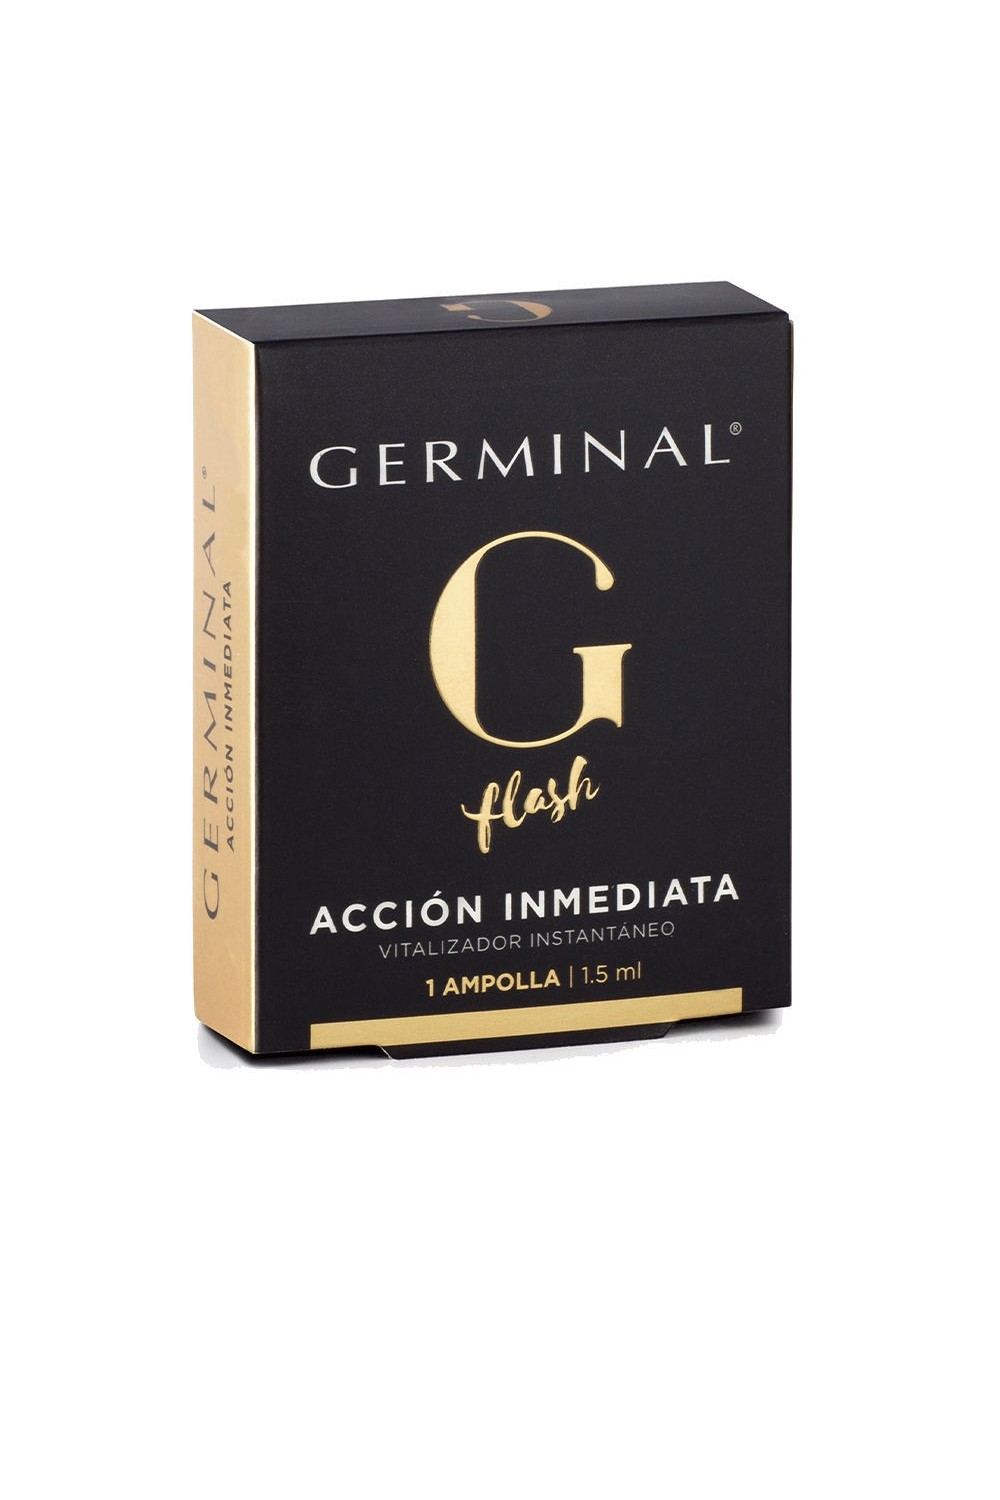 Germinal Inmediate Action Ampules 1x1.5ml